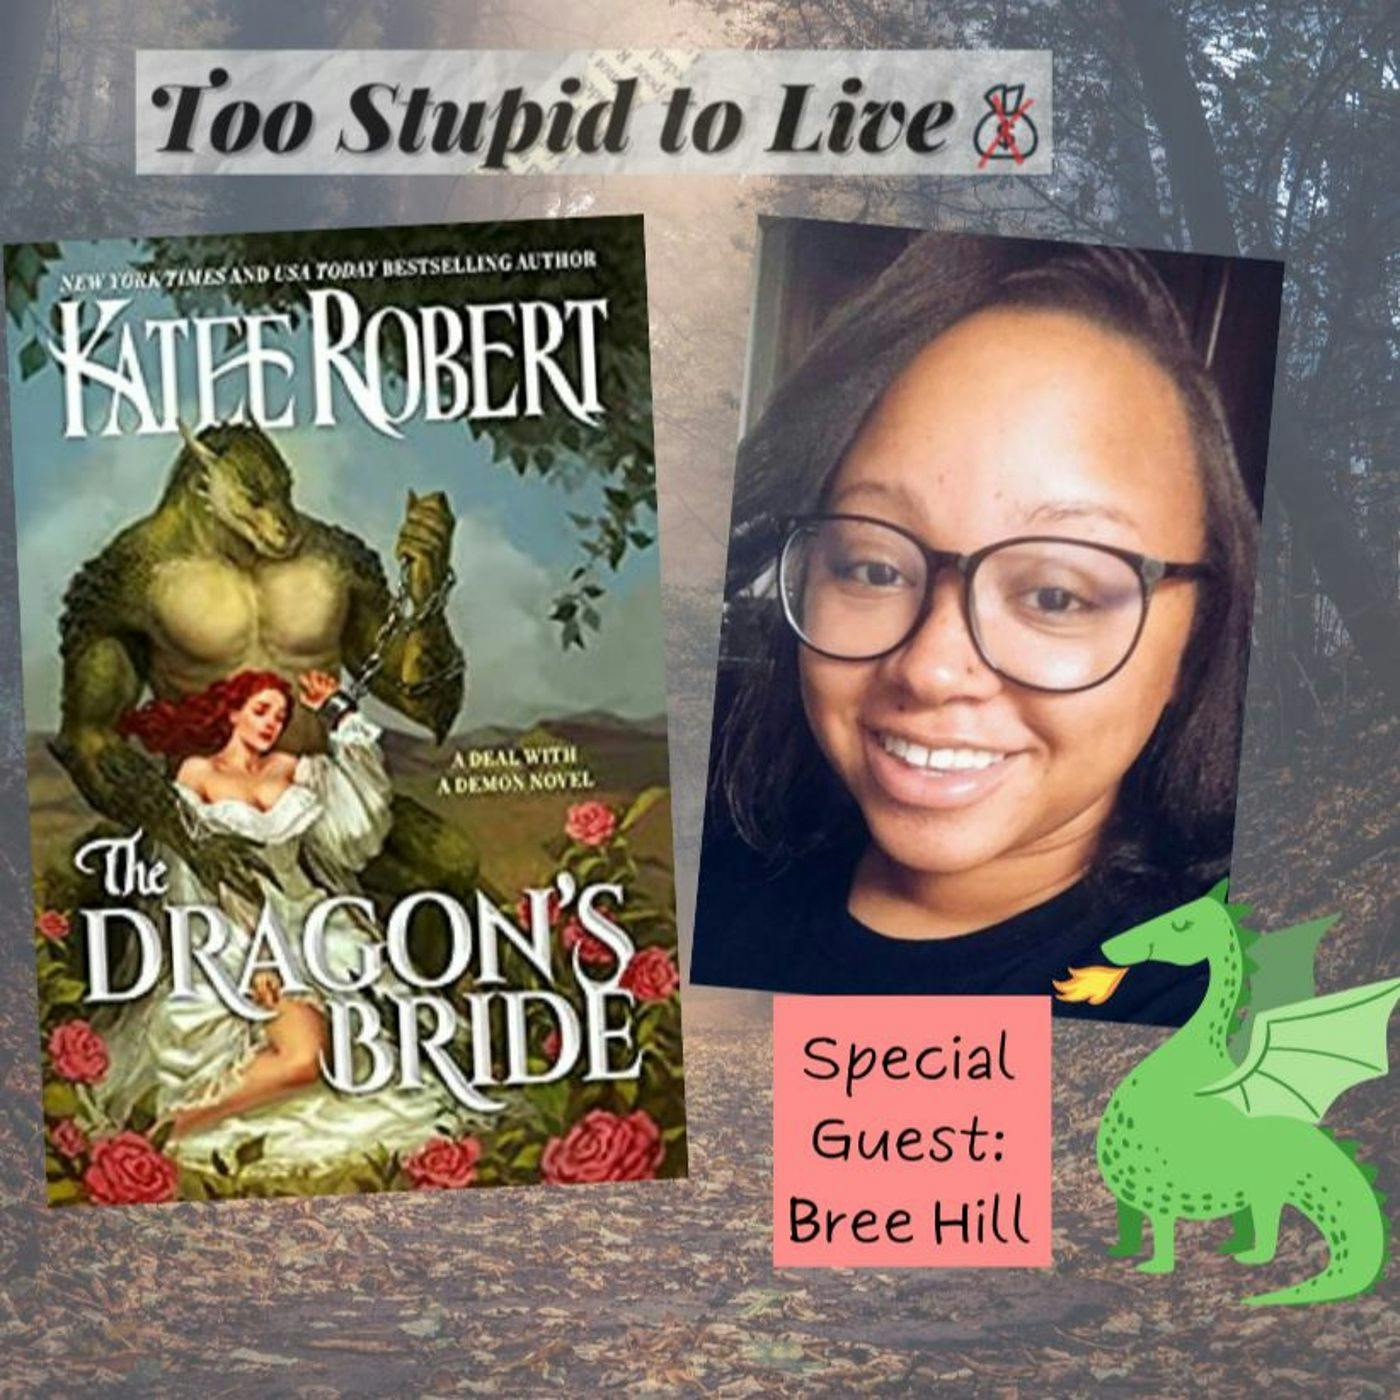 The Dragon's Bride with Bree Hill